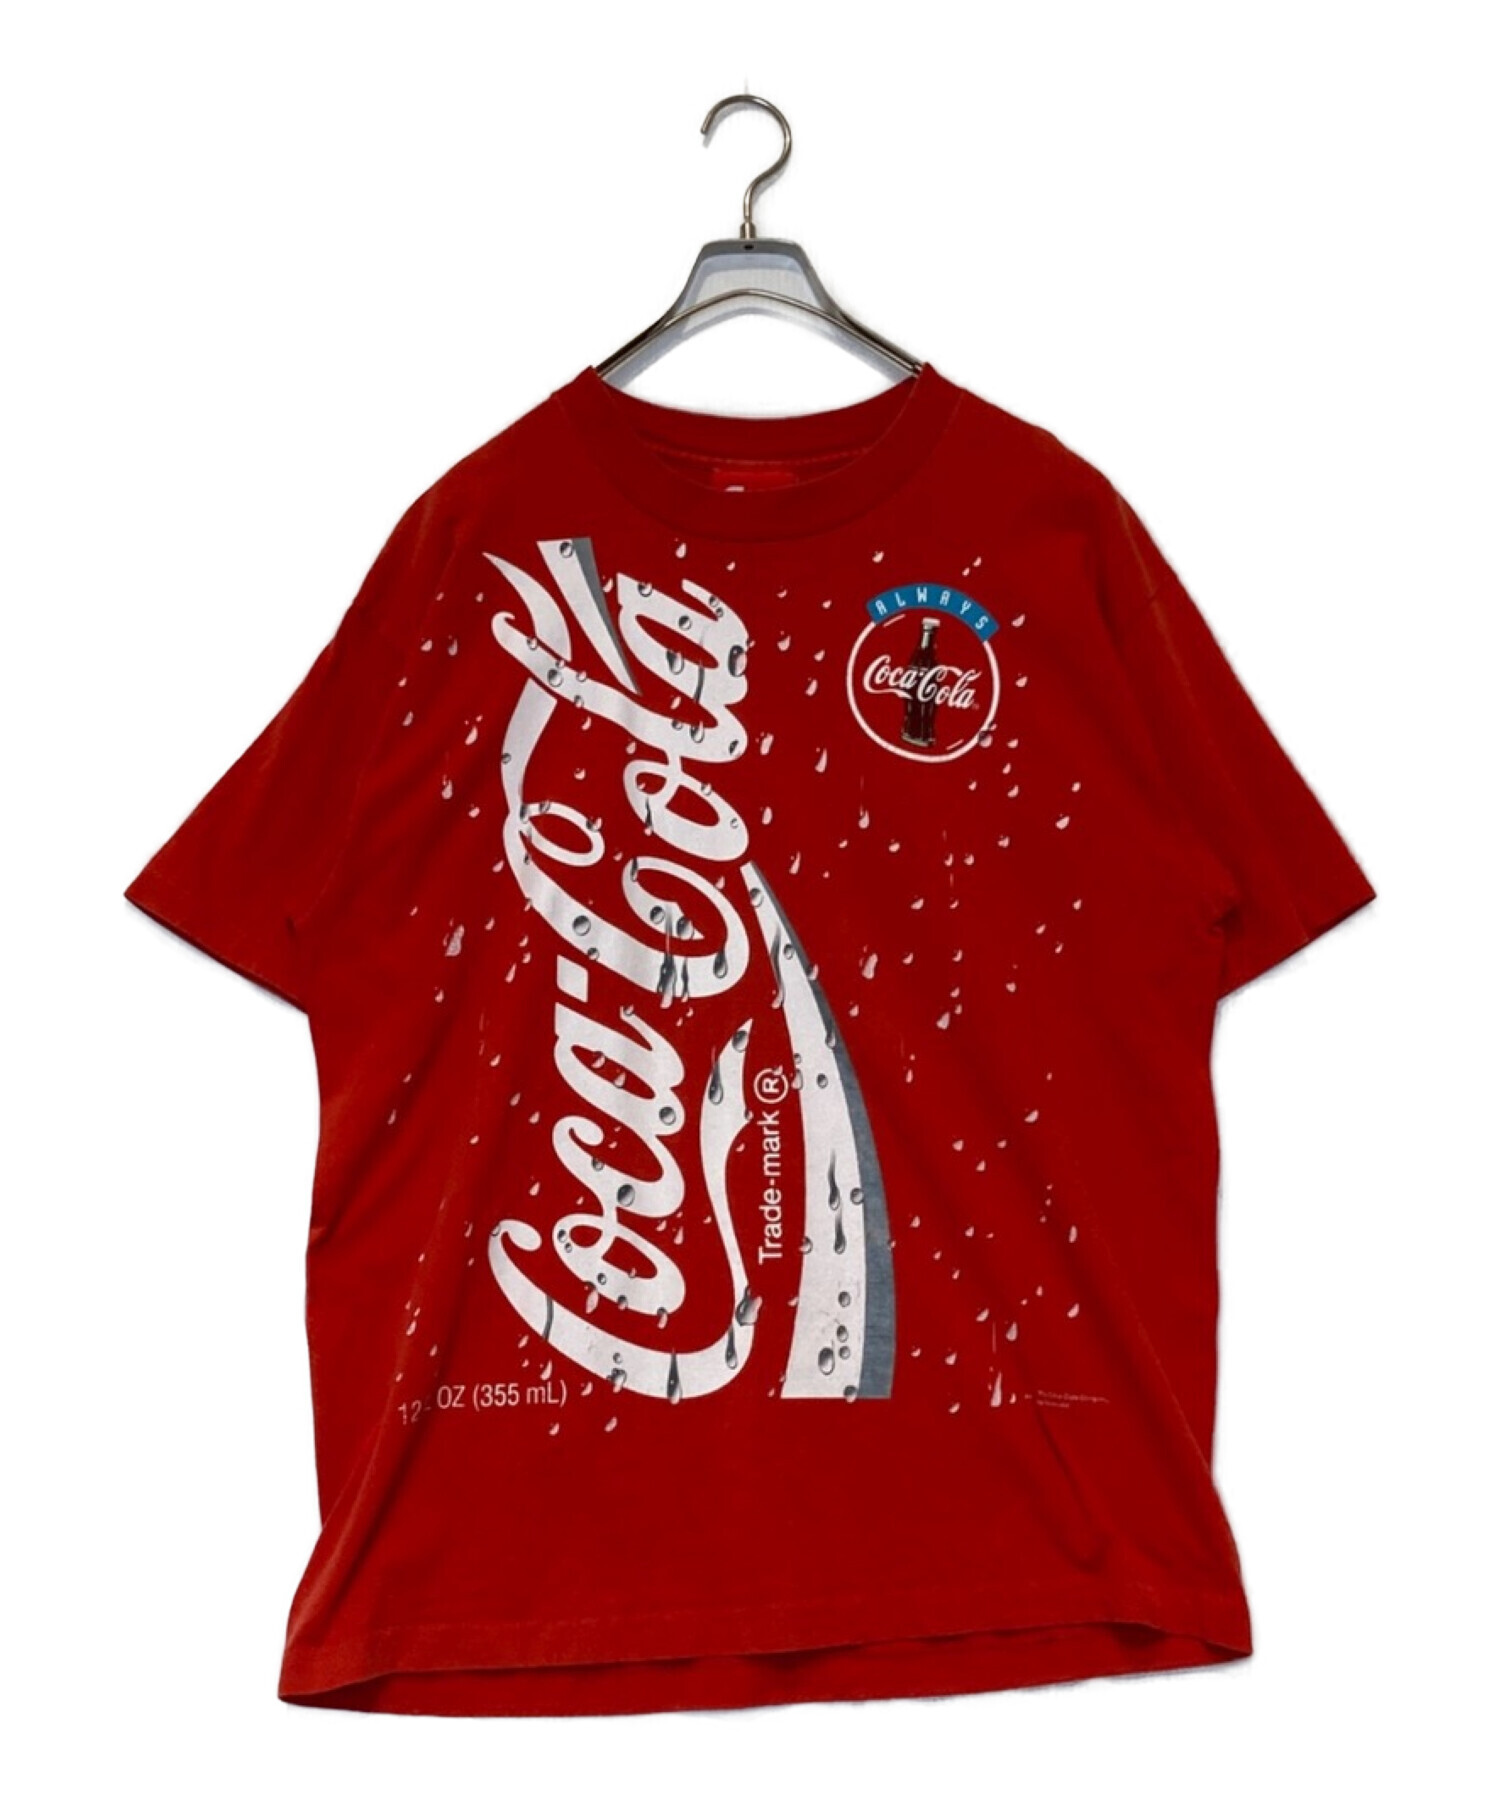 Coca Cola (コカコーラ) Tシャツ レッド サイズ:XL